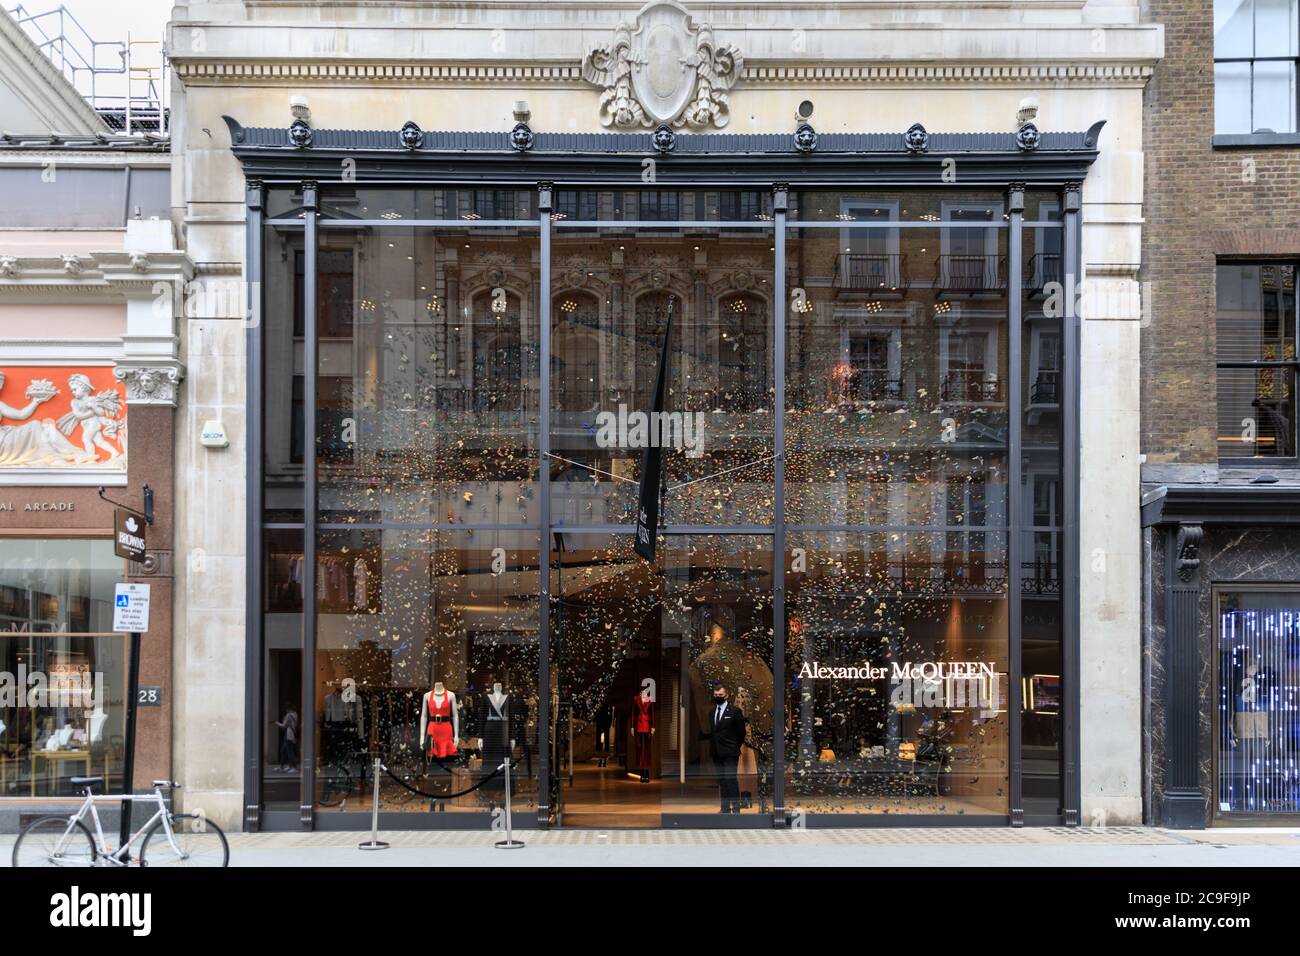 Alexander McQueen opens new flagship store on Old Bond Street